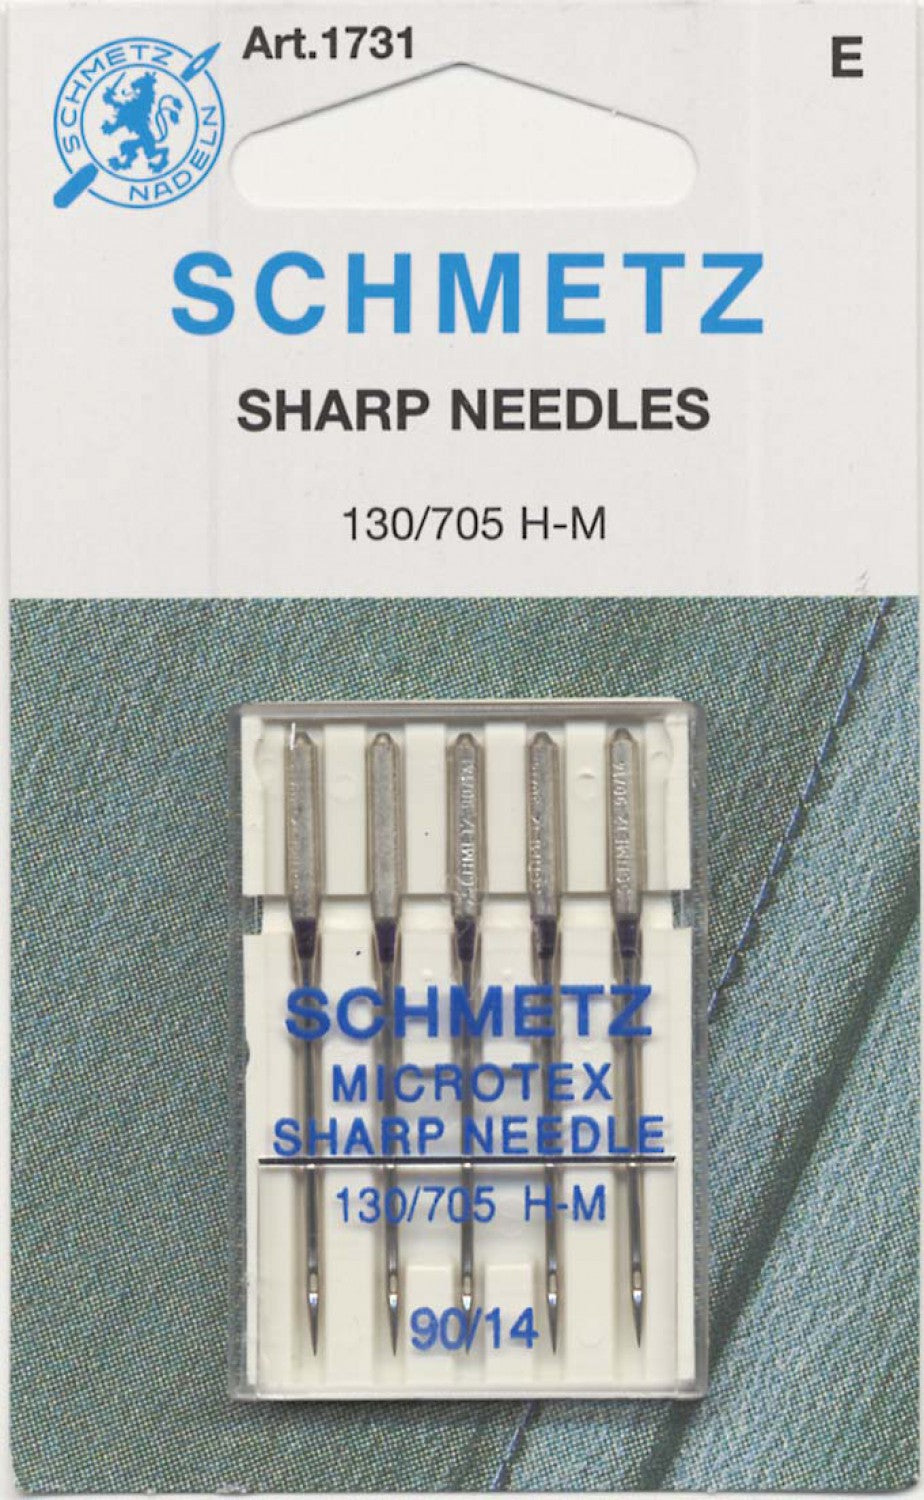 Schmetz  Microtex (Sharp) Needles - 90/14